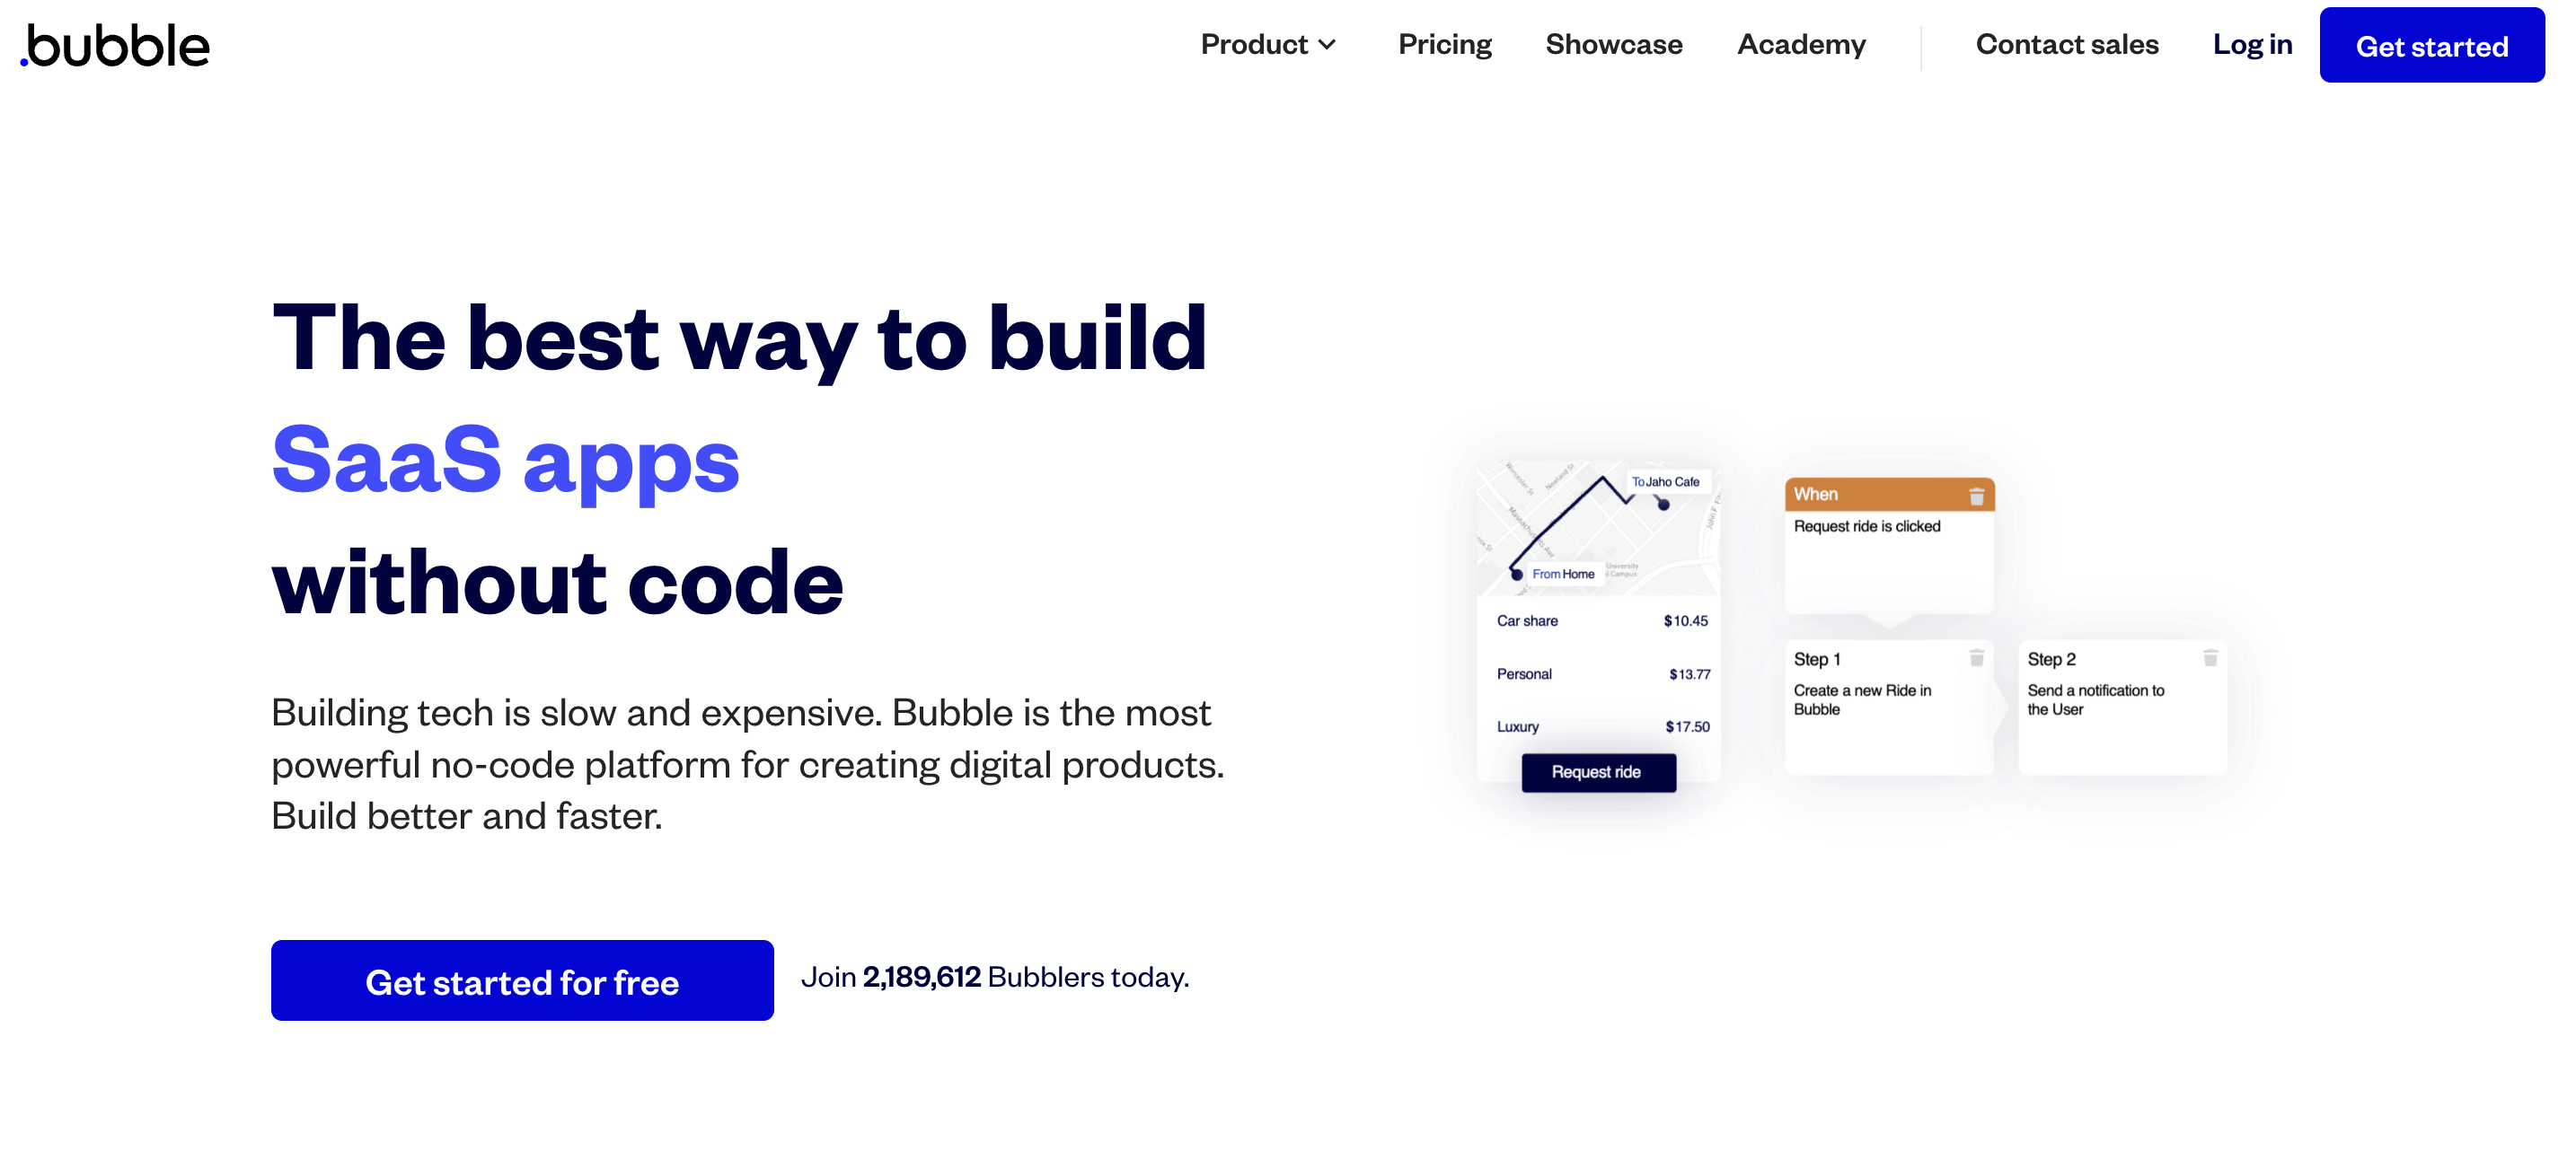 bubble top no-code platform